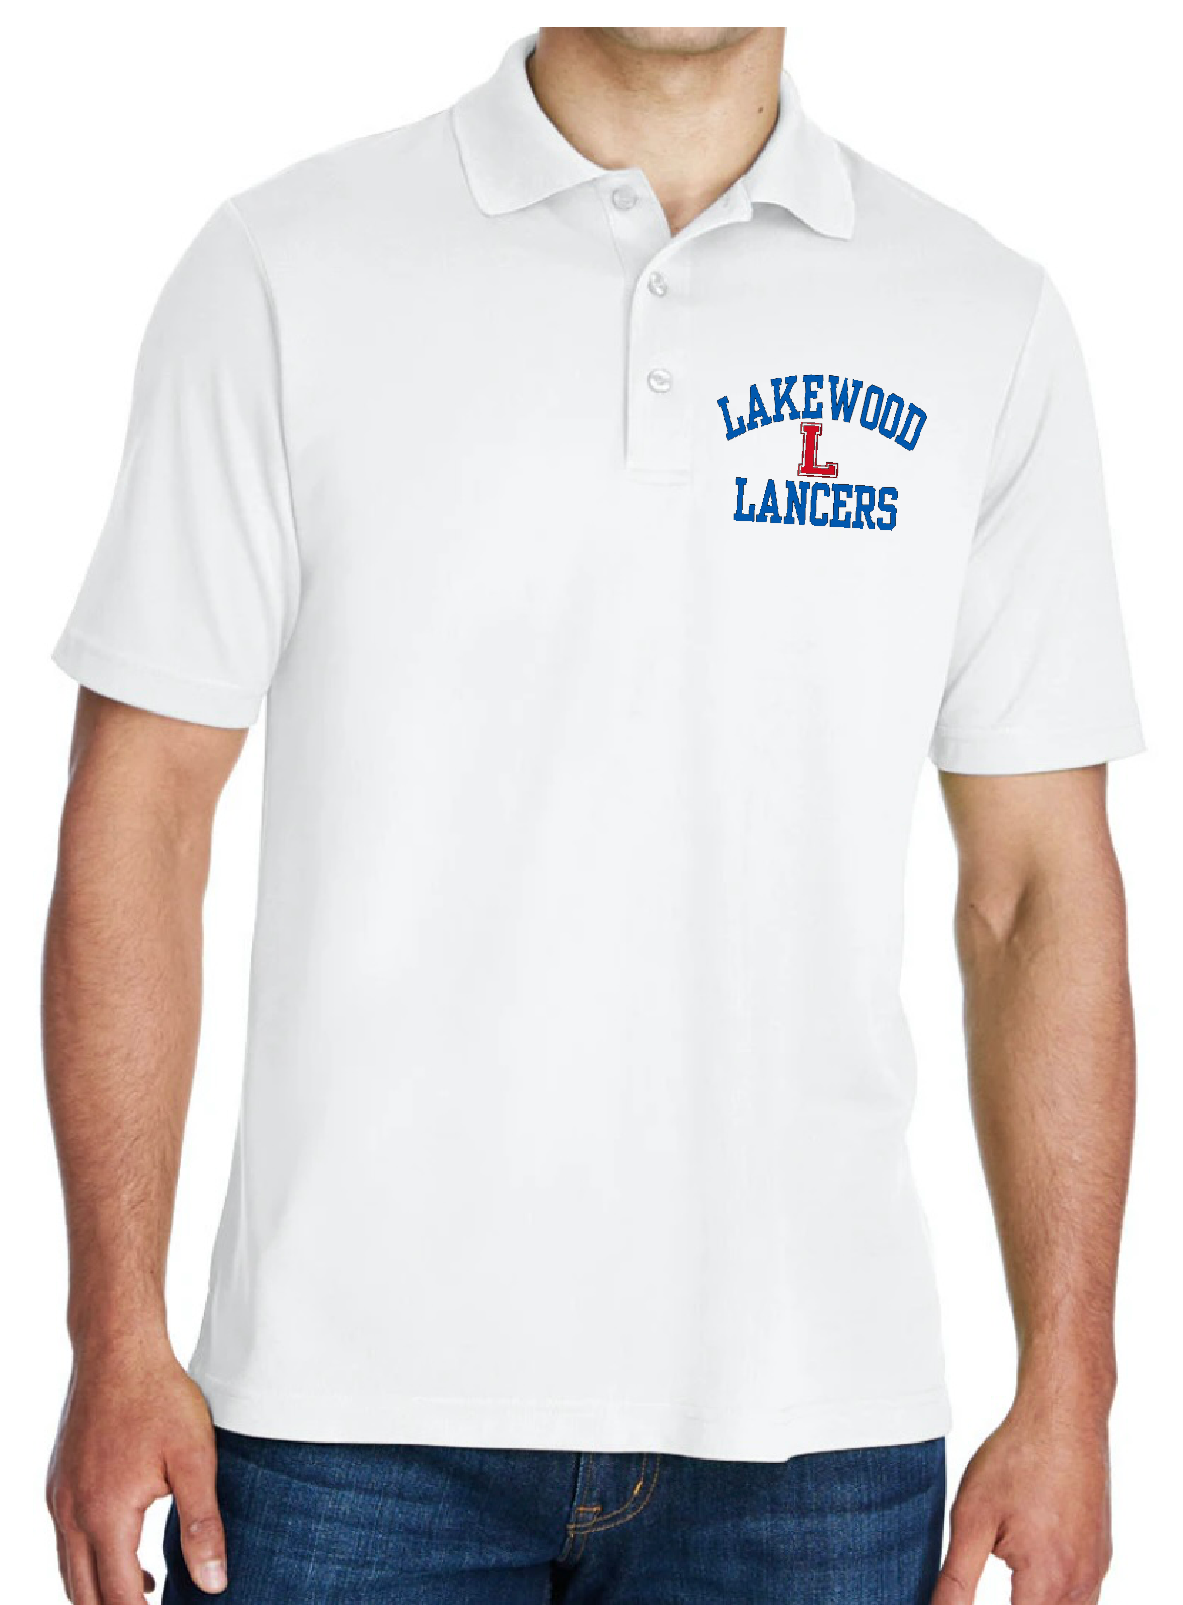 Lakewood Lancers Mens Pique Polo Shirt